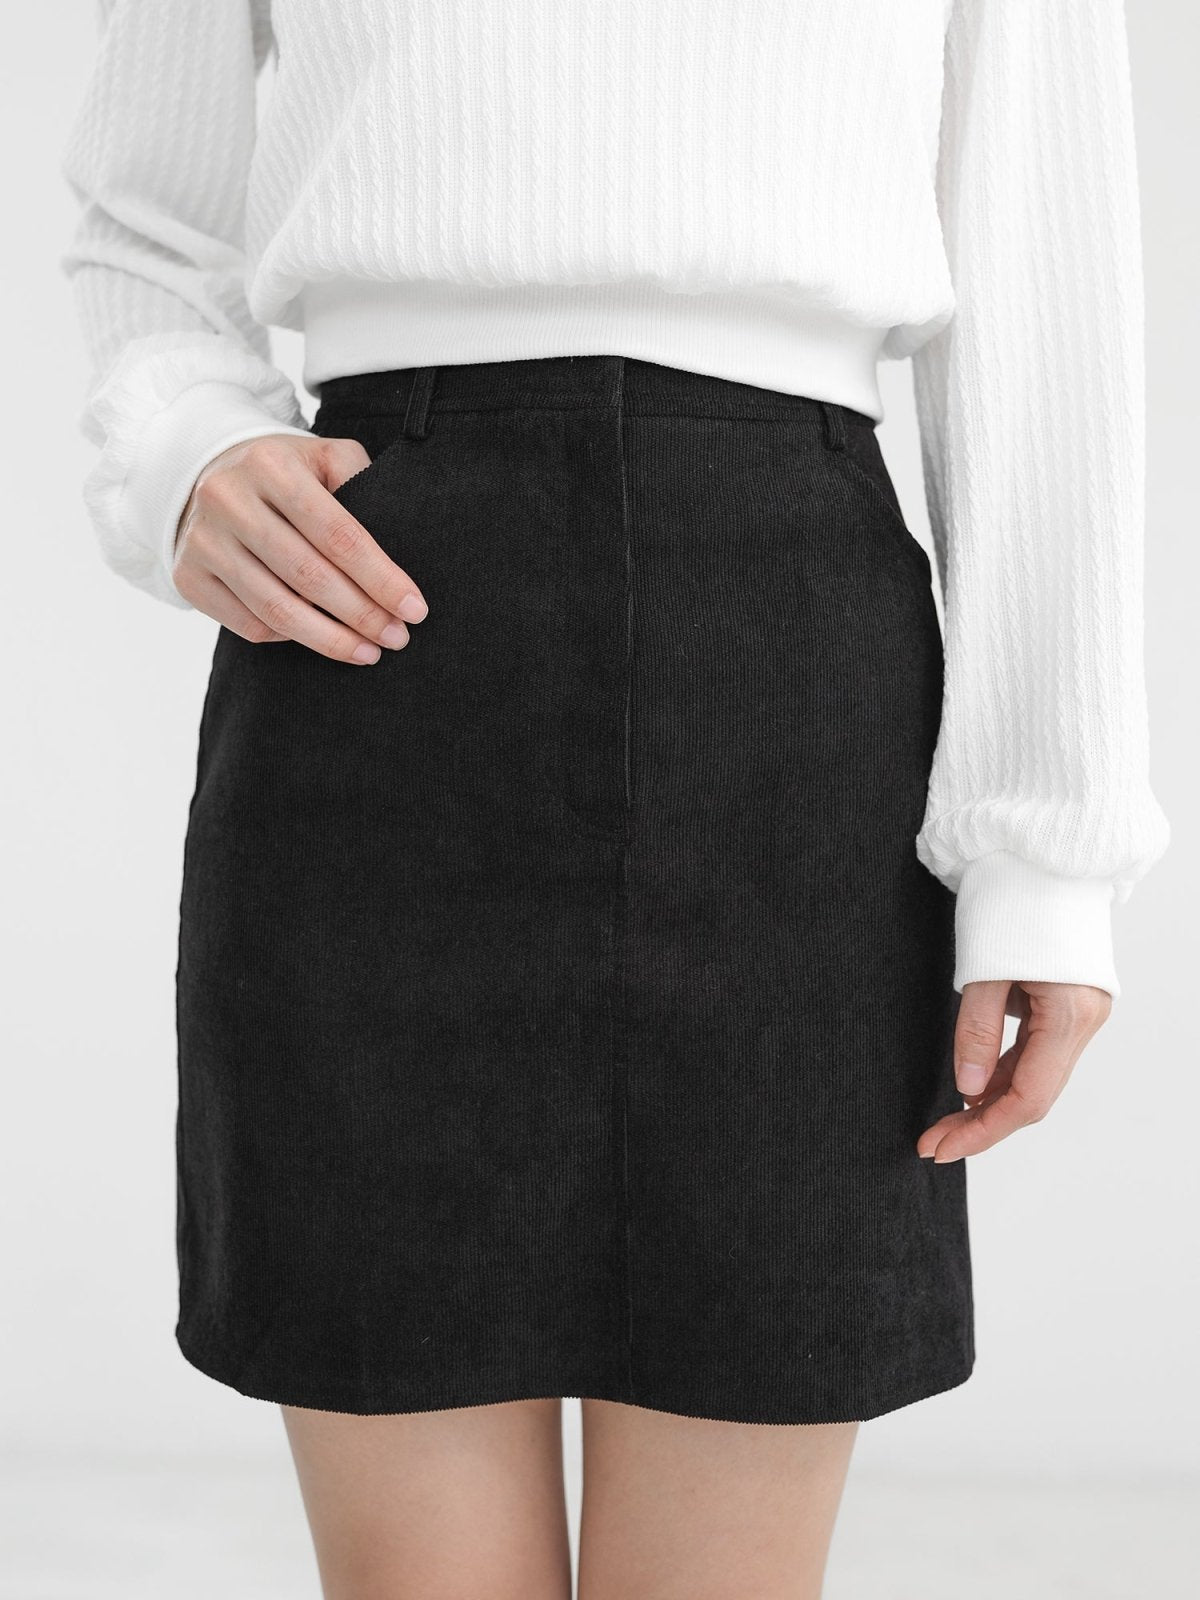 Raven Corduroy Mini Skirt - DAG-DD1266-23BlackS - Black - S - D'zage Designs